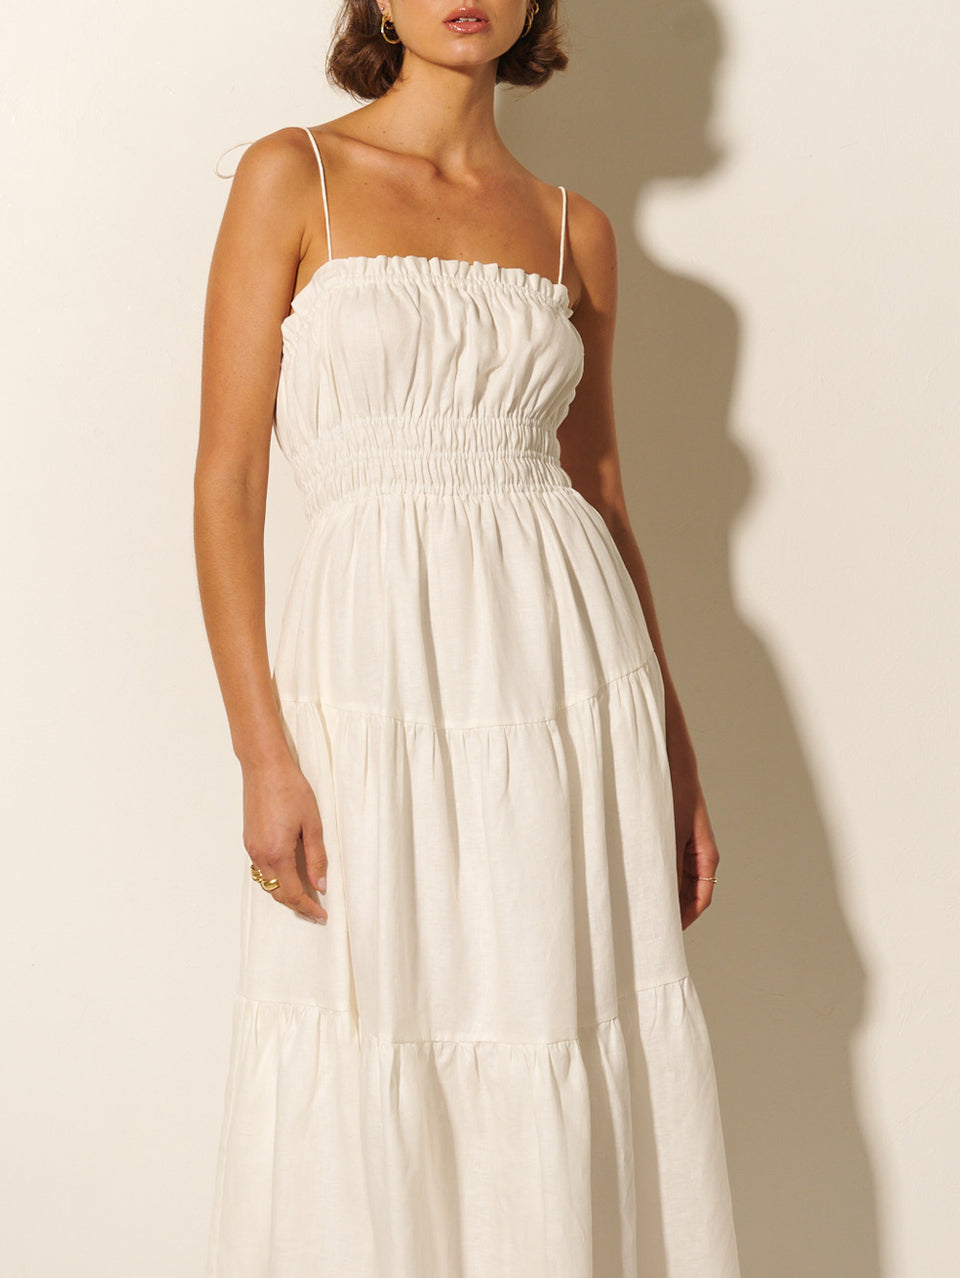 Corine Midi Dress KIVARI | Model wears ivory midi dress close up